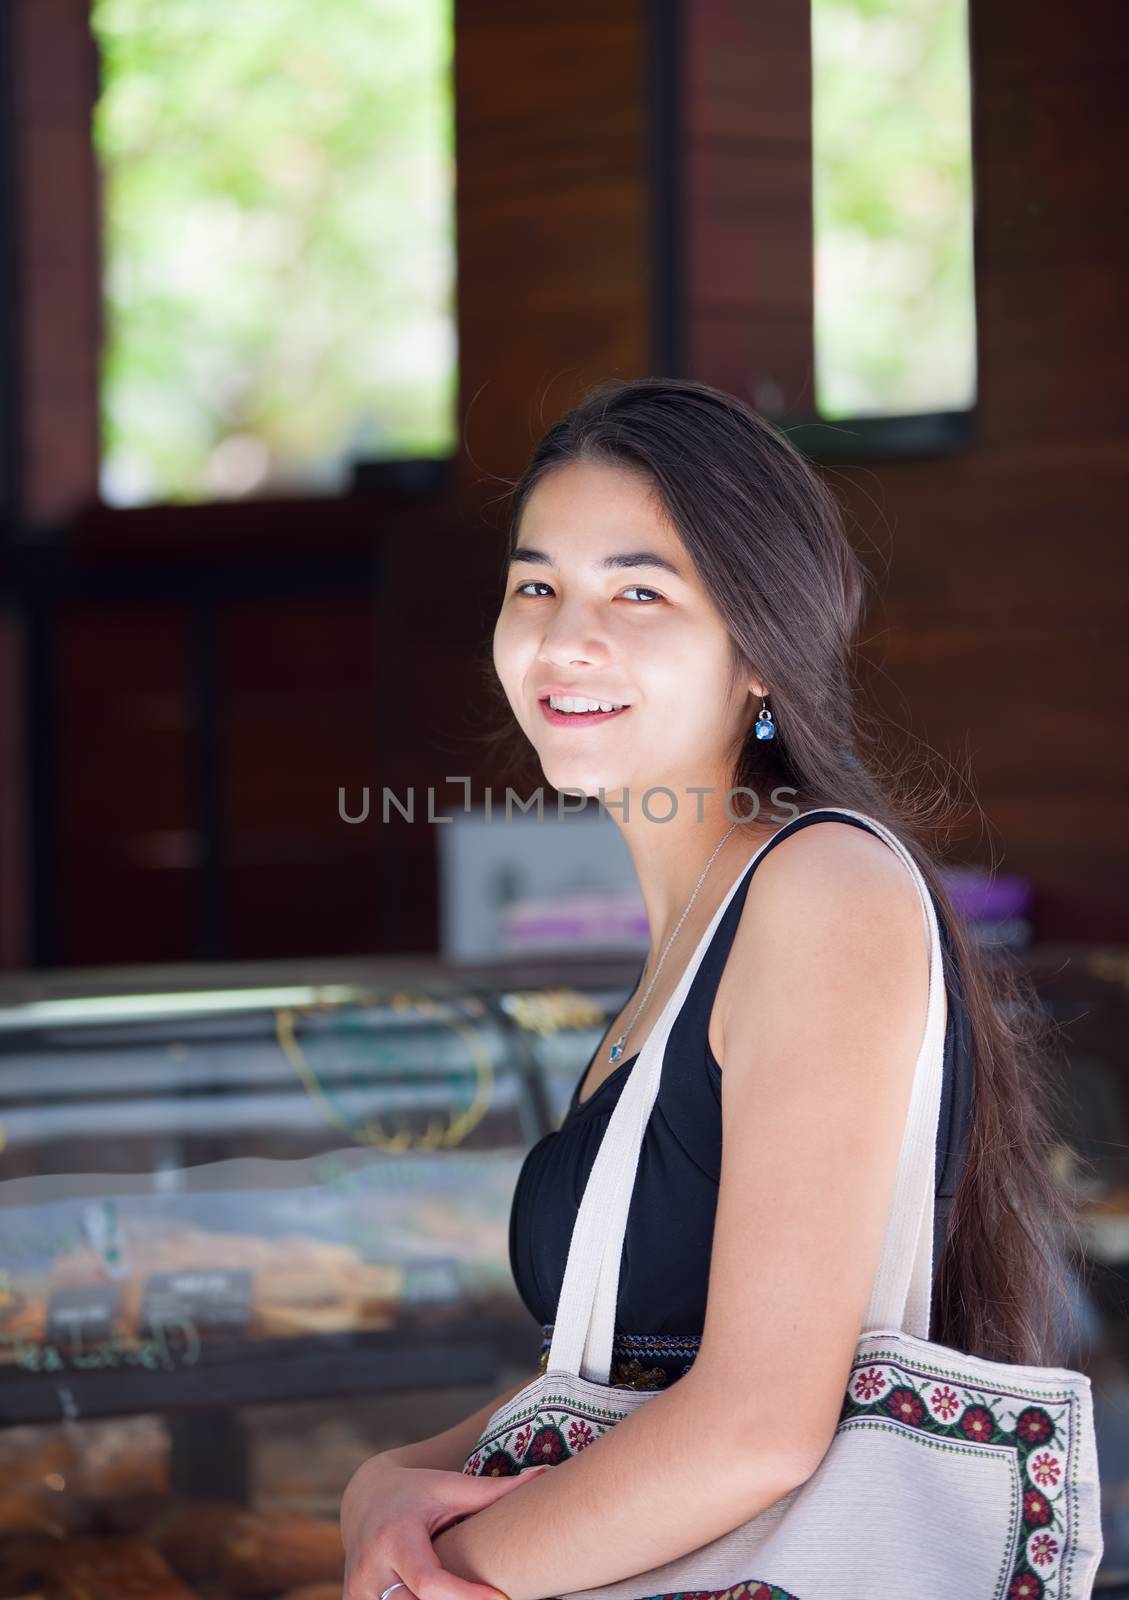 Beautiful biracial Asian, Caucasian, teen girl standing in line at cafe, smiling